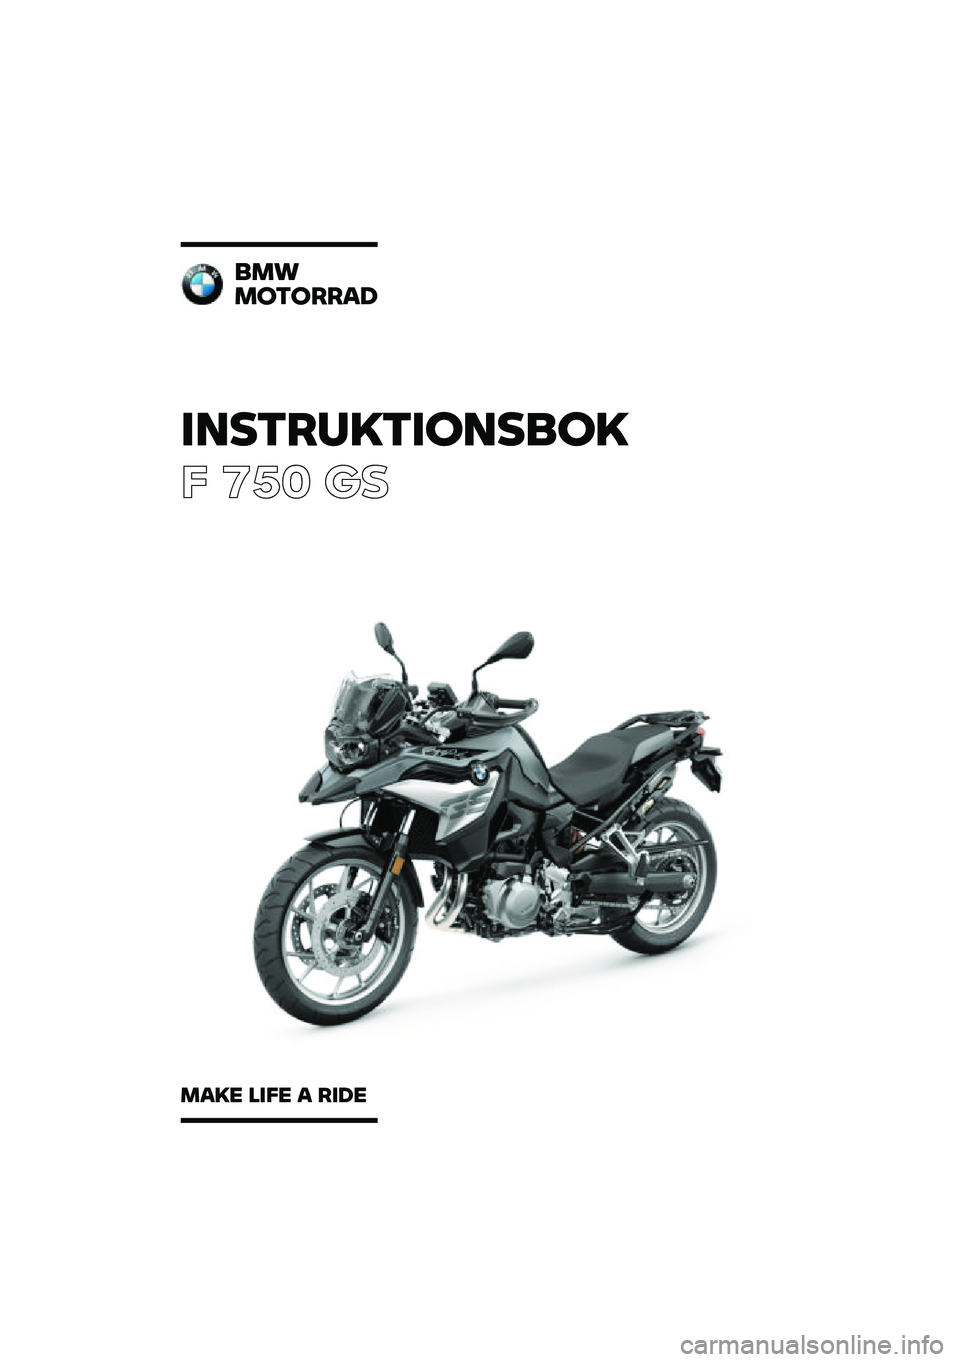 BMW MOTORRAD F 750 GS 2020  Instruktionsbok (in Swedish) �������\b���	���
�	�\b
� ��� �\b�	
�
��\f
��	��	���
�
��
�\b� ���� �
 ���� 